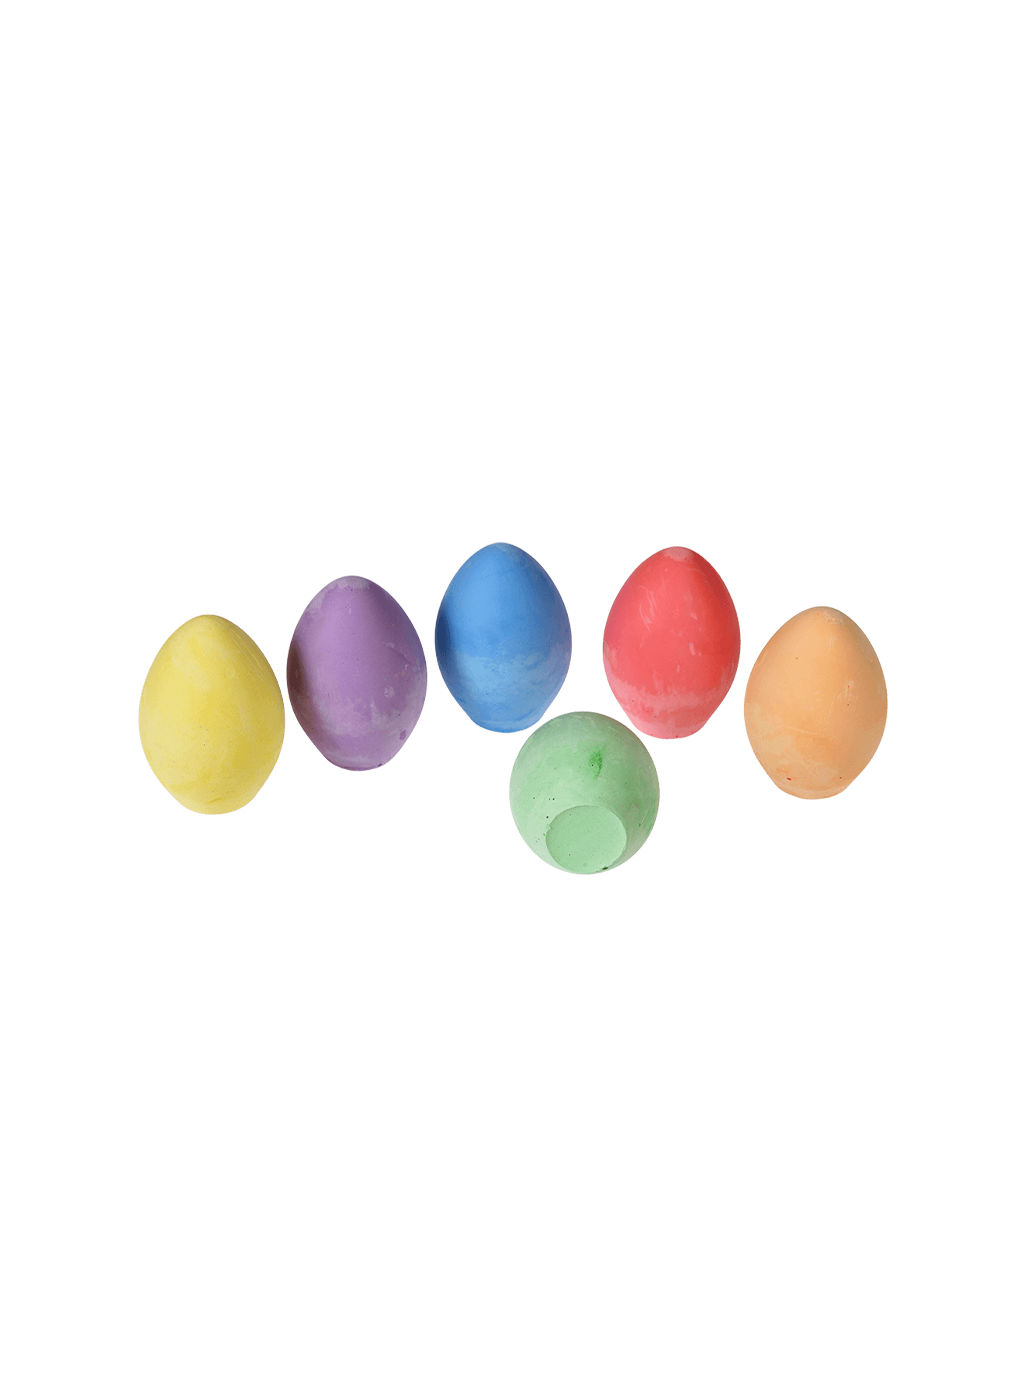 Six coloured chalk eggs